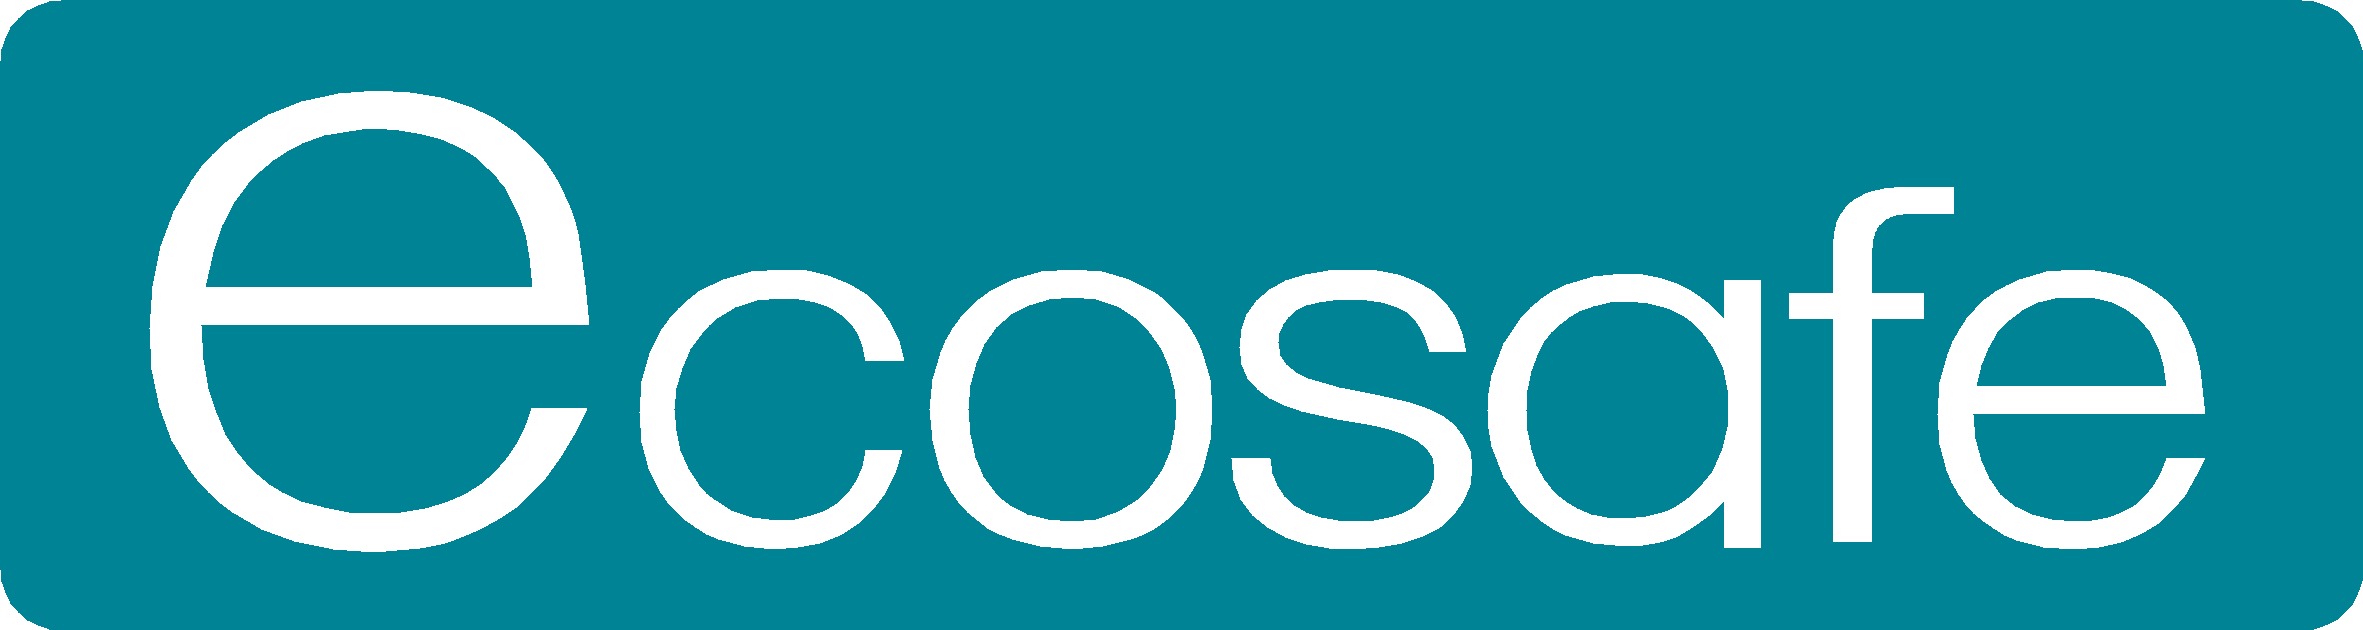 logo for Ecosafe Heating Ltd ta Ecosafe Group